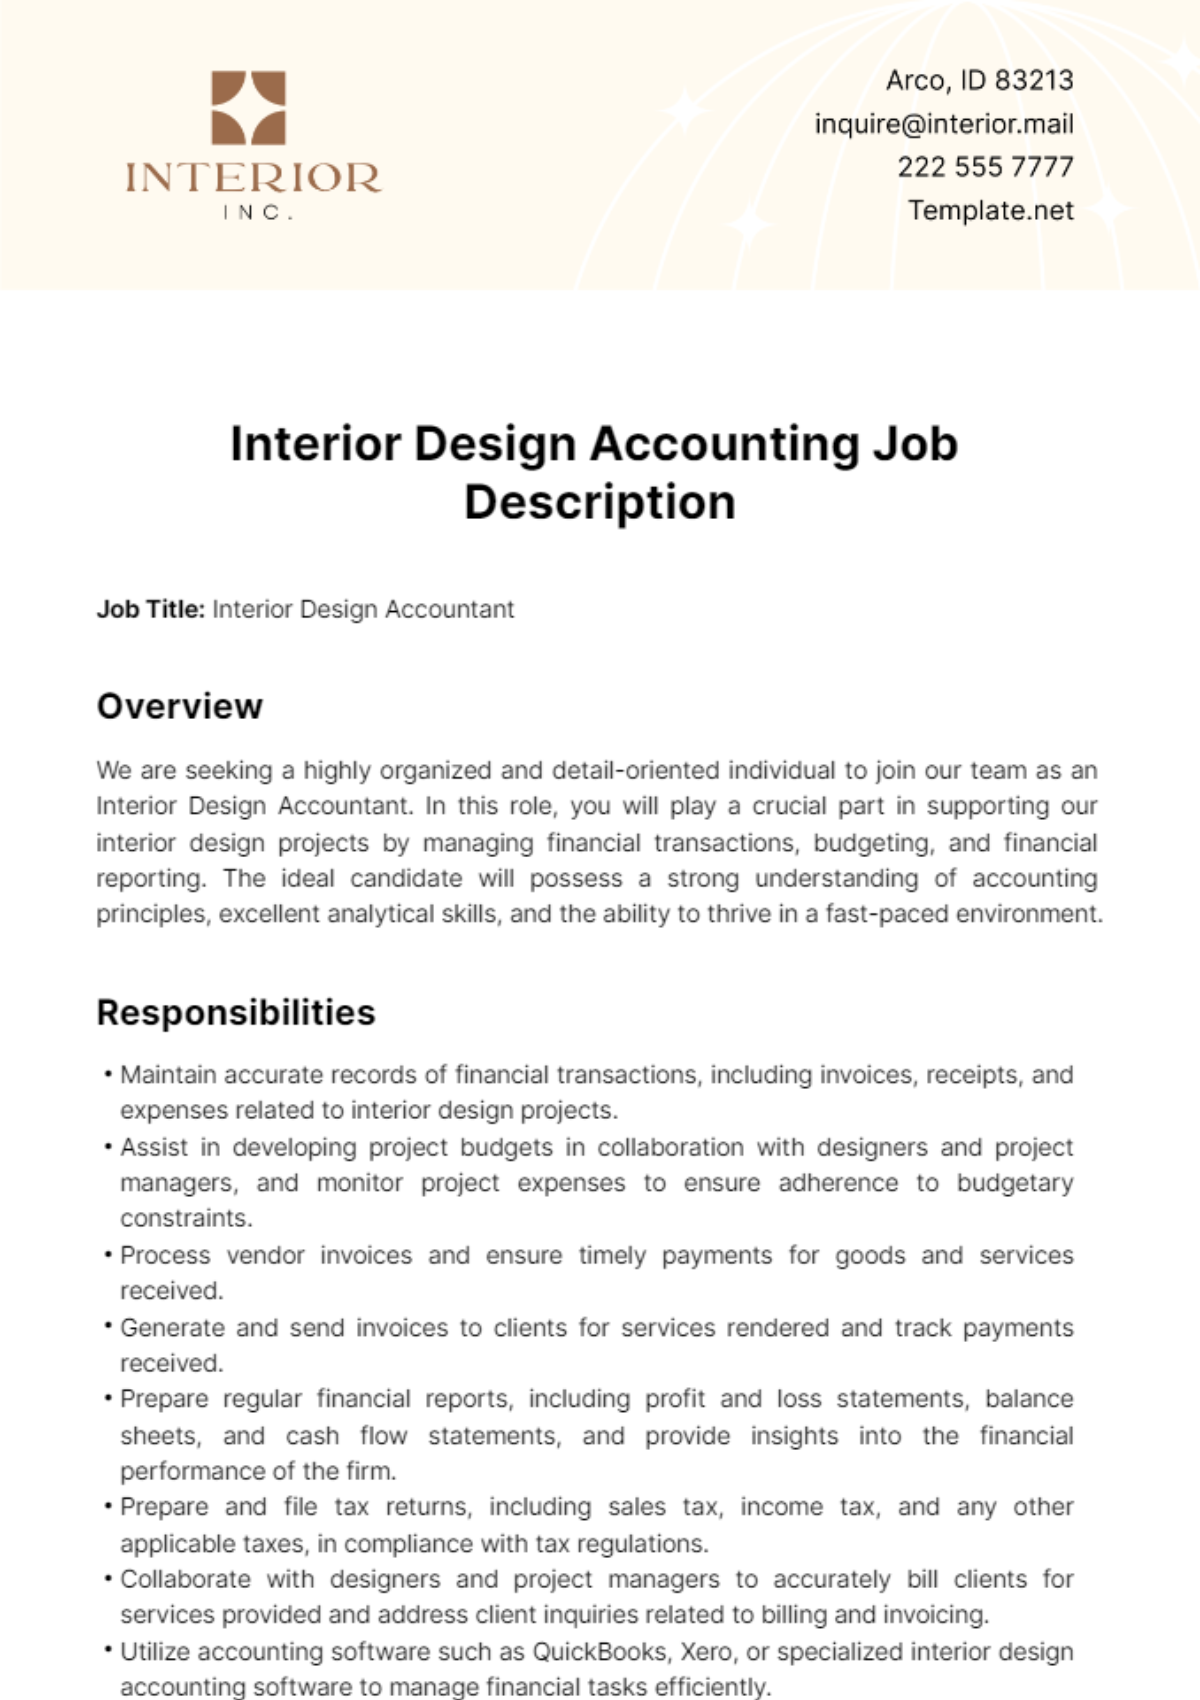 Interior Design Accounting Job Description Template